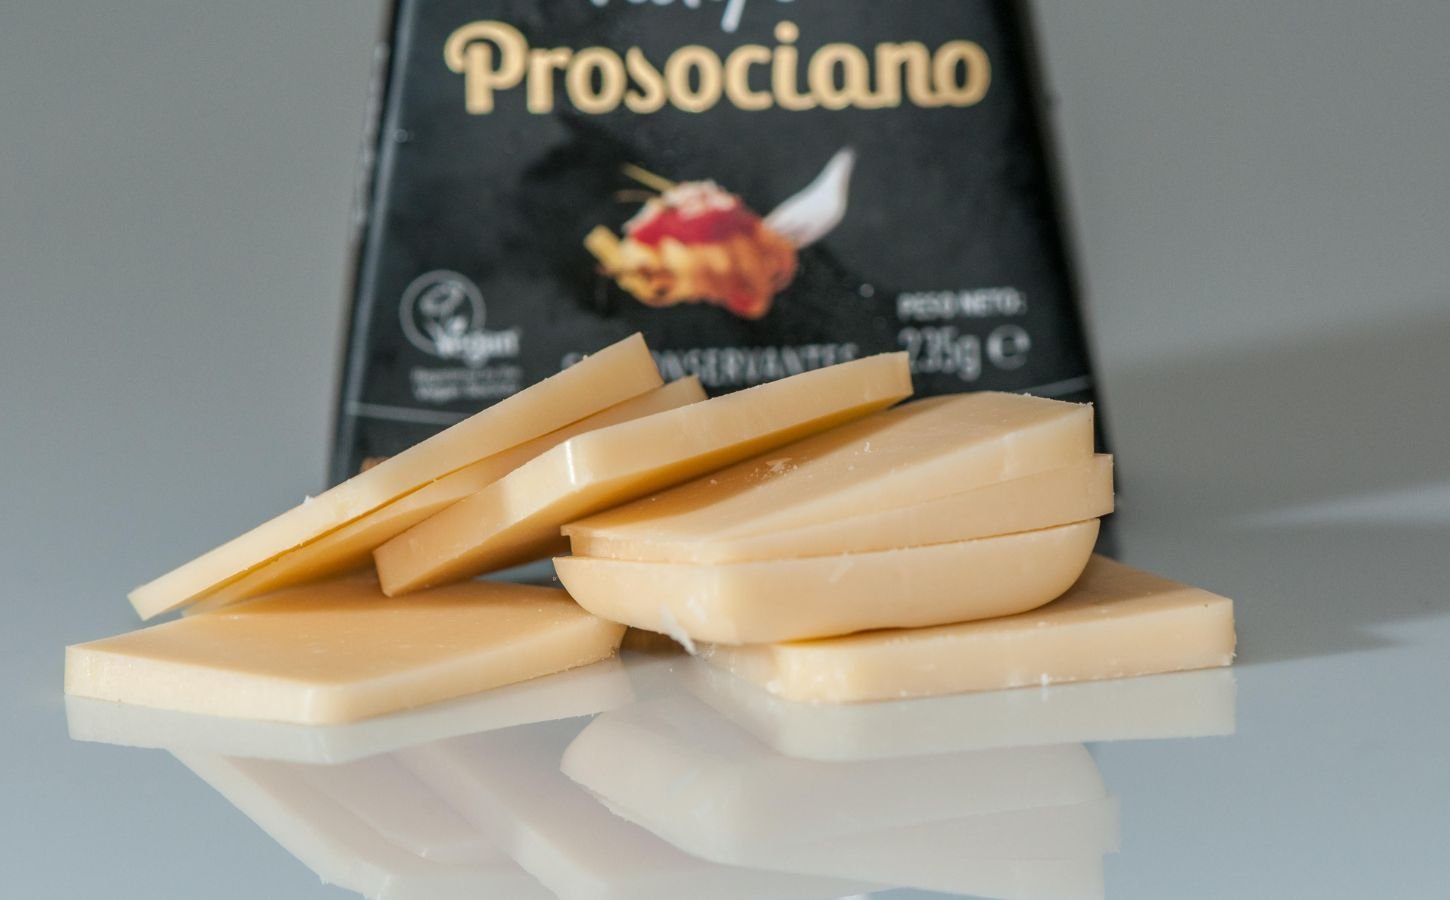 Vegan prosociano cheese from Violife